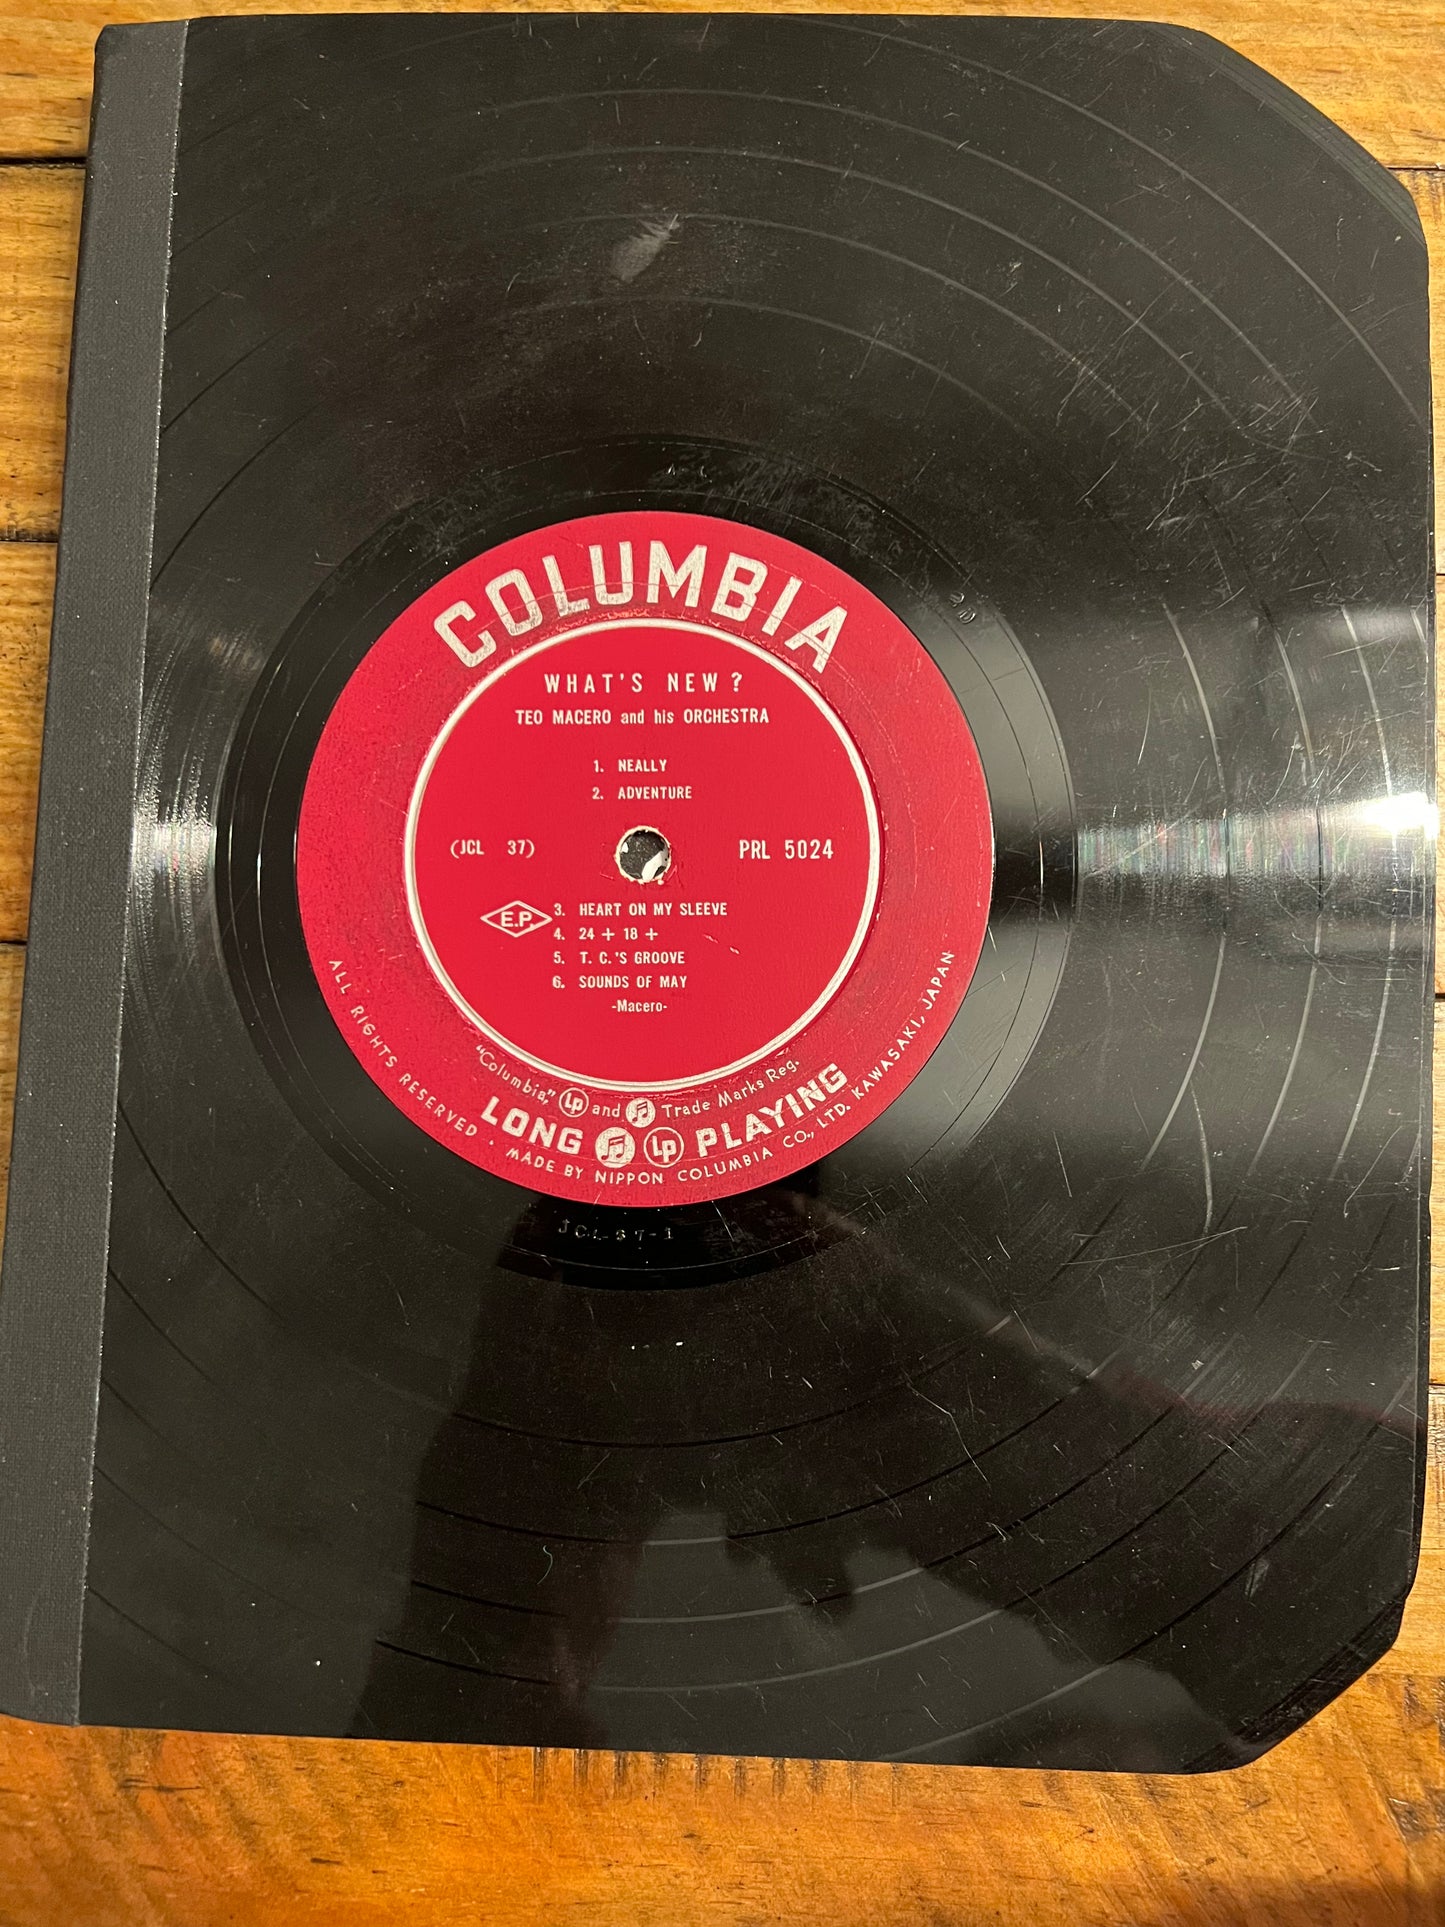 Vintage Record Composition Books